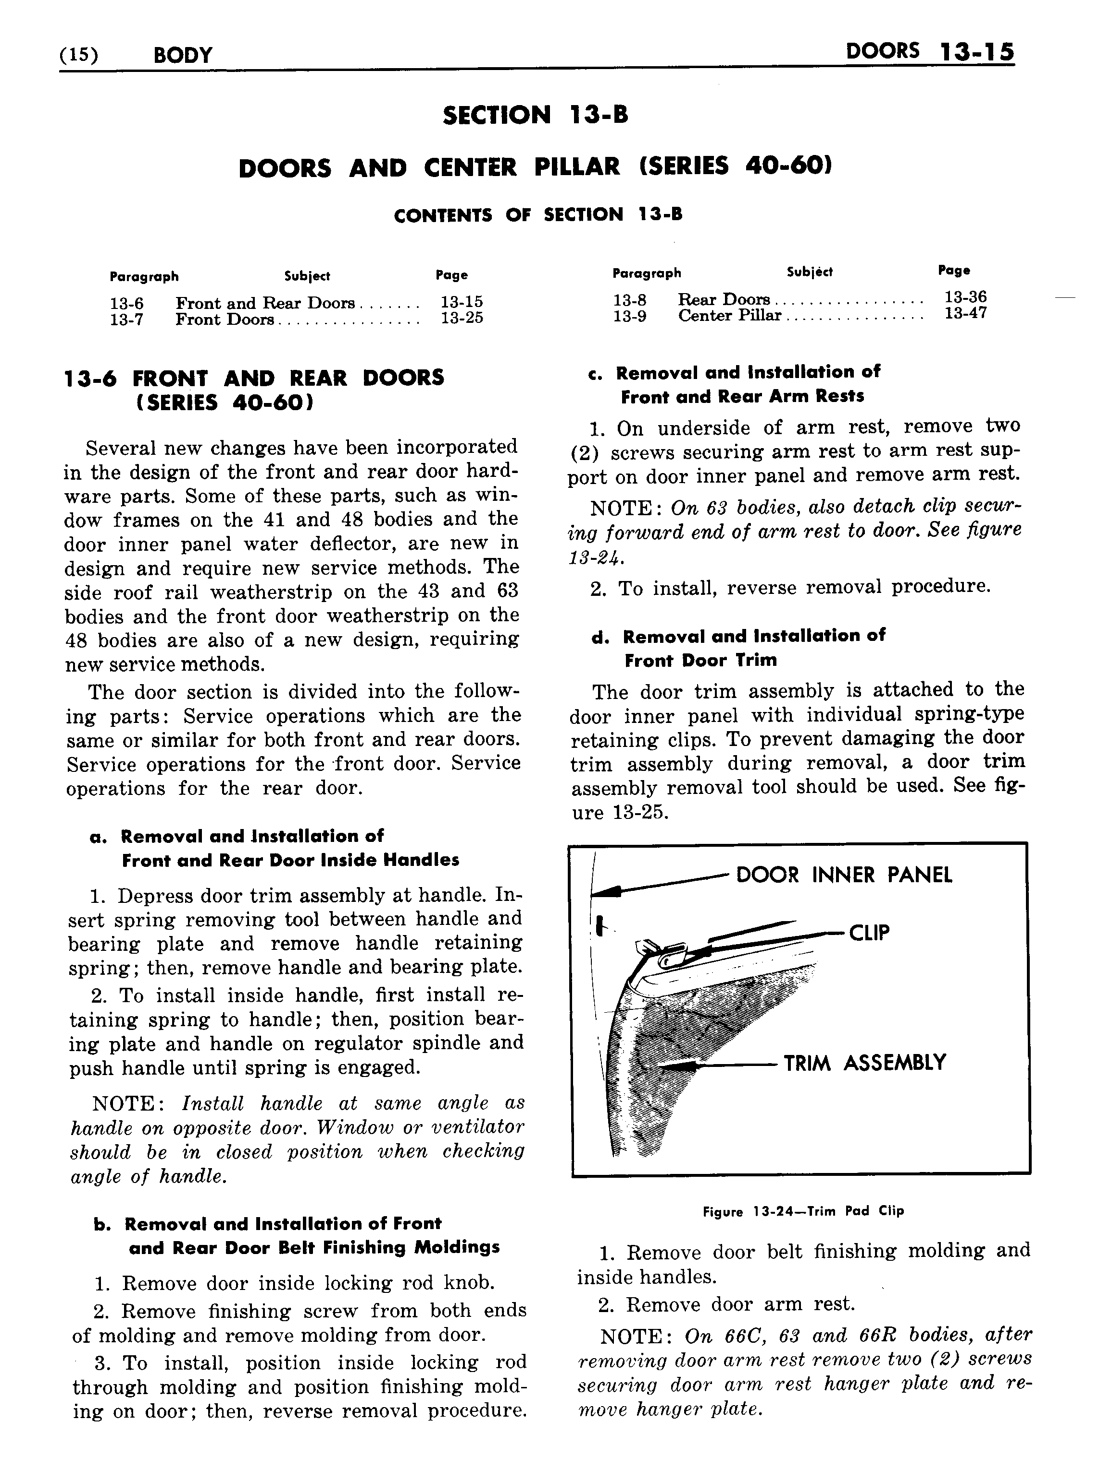 n_1957 Buick Body Service Manual-017-017.jpg